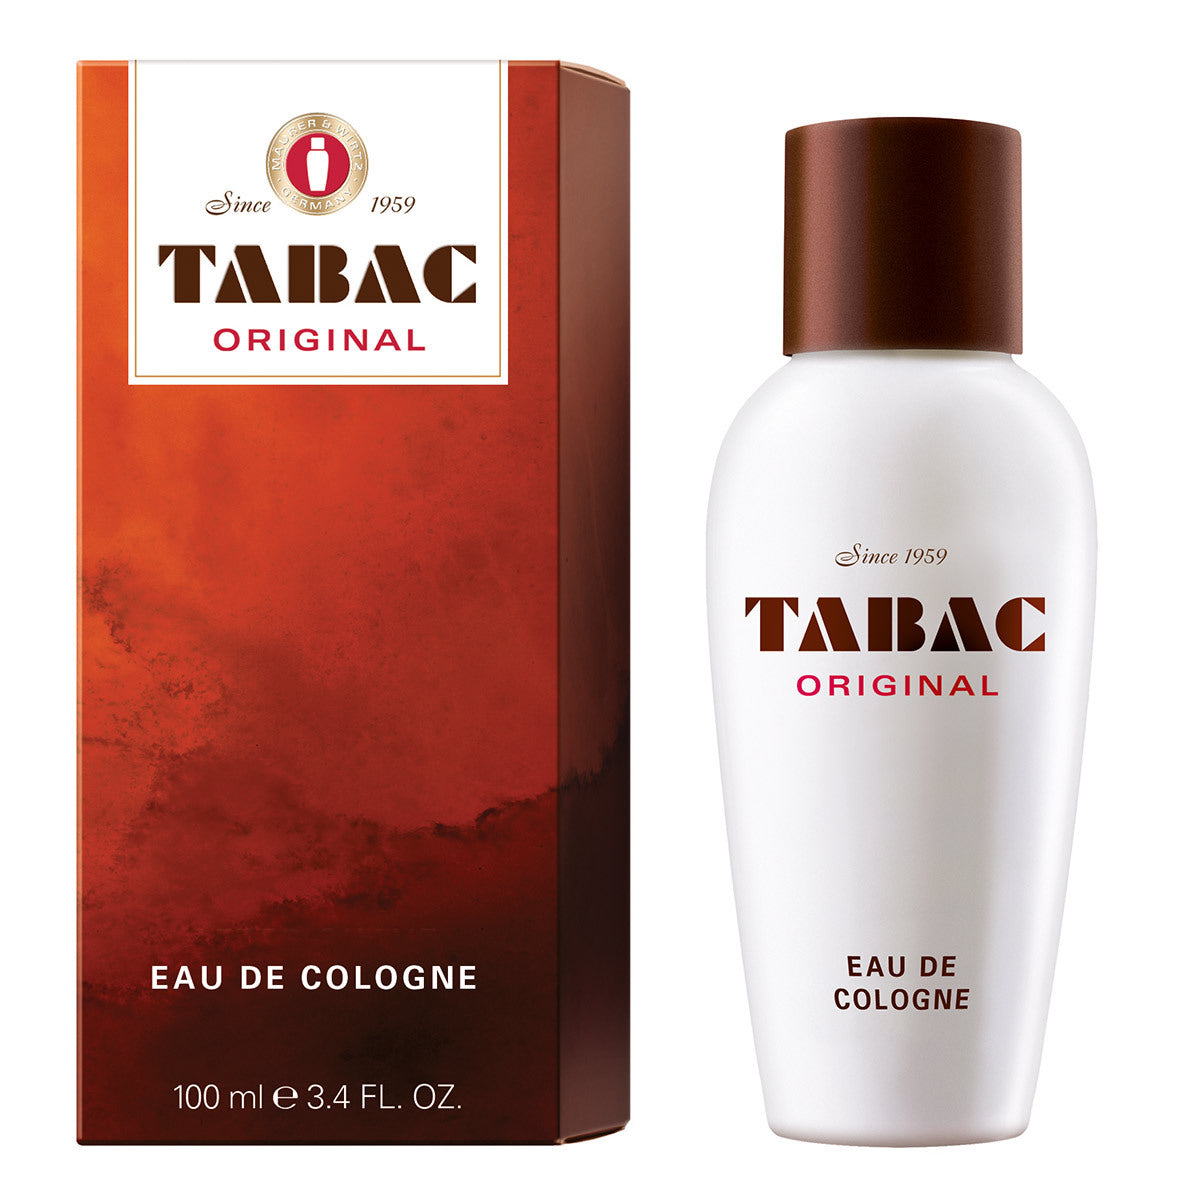 Primary image of Tabac Original Eau de Cologne